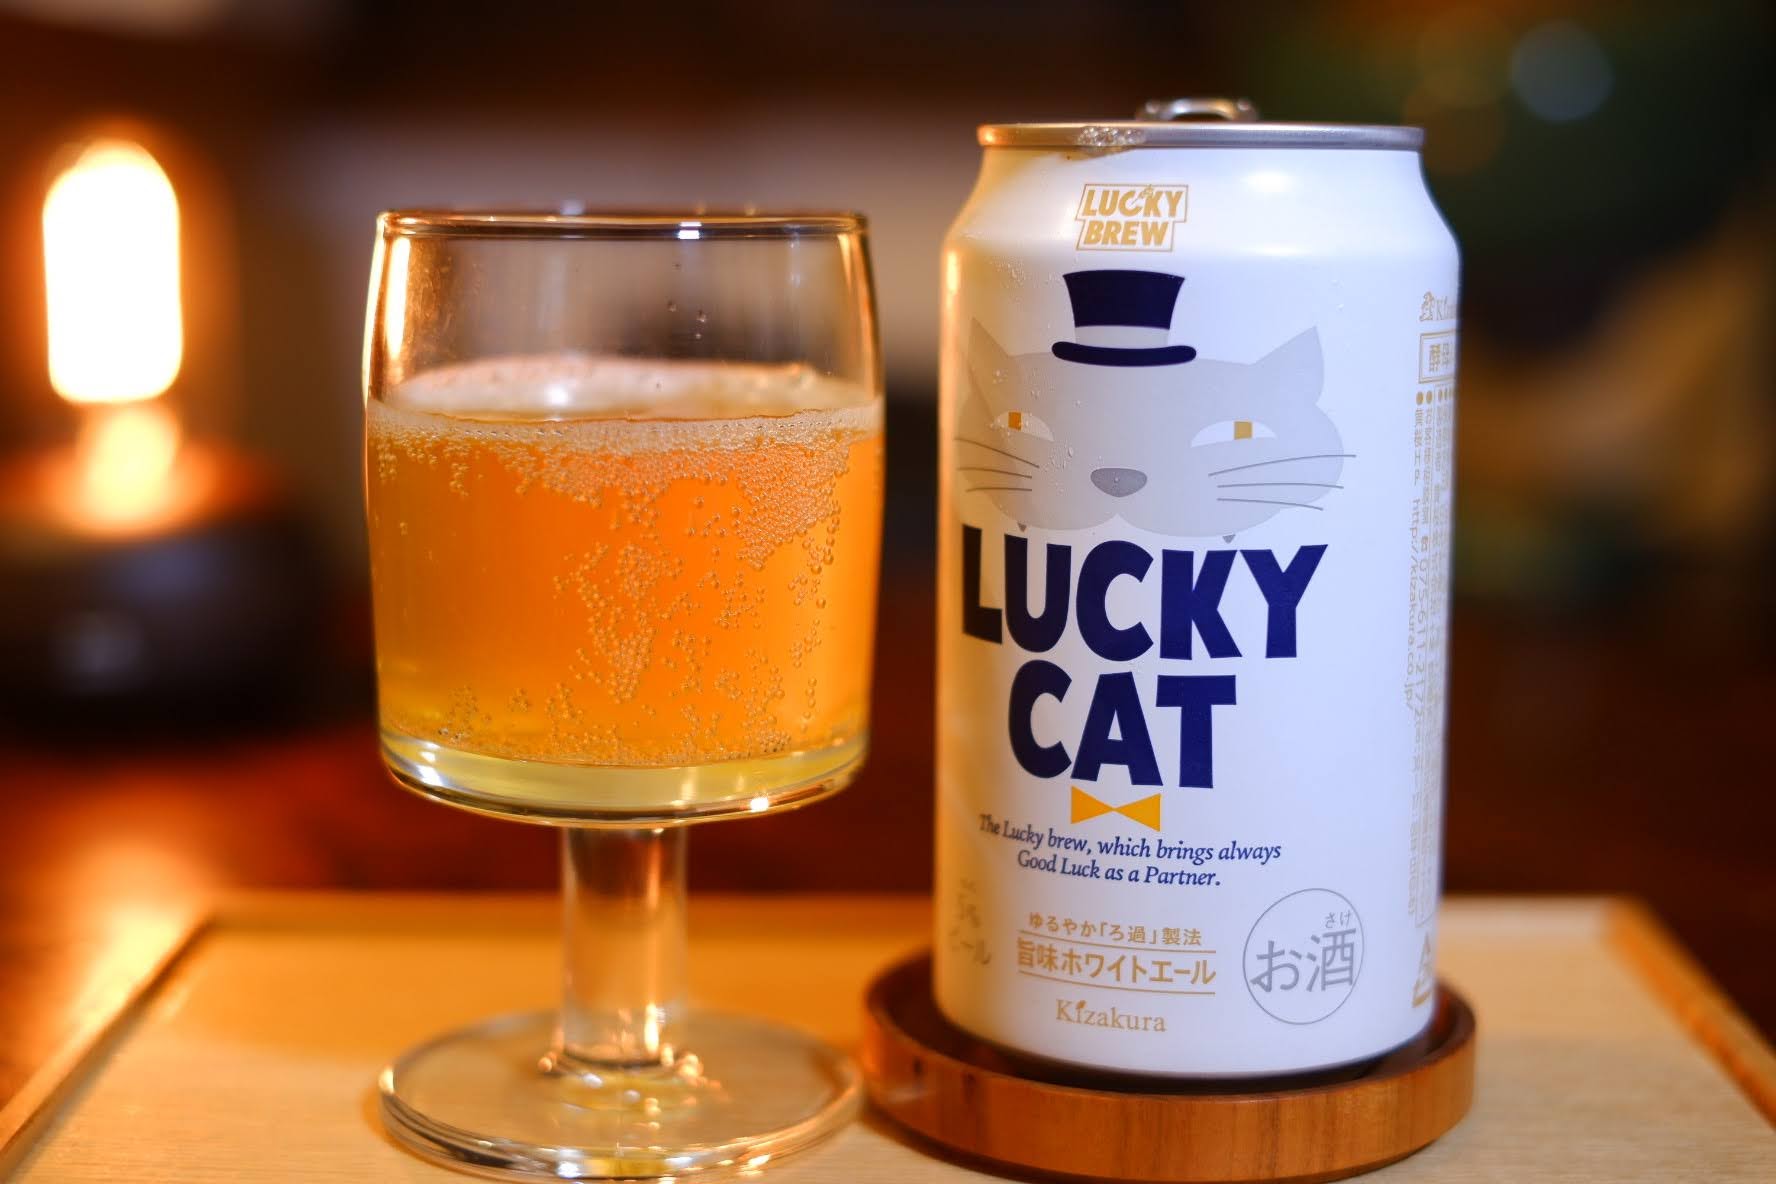 Lucky Cat 酒造メーカーが放つ京都全開ホワイトエール ザ ニートビール